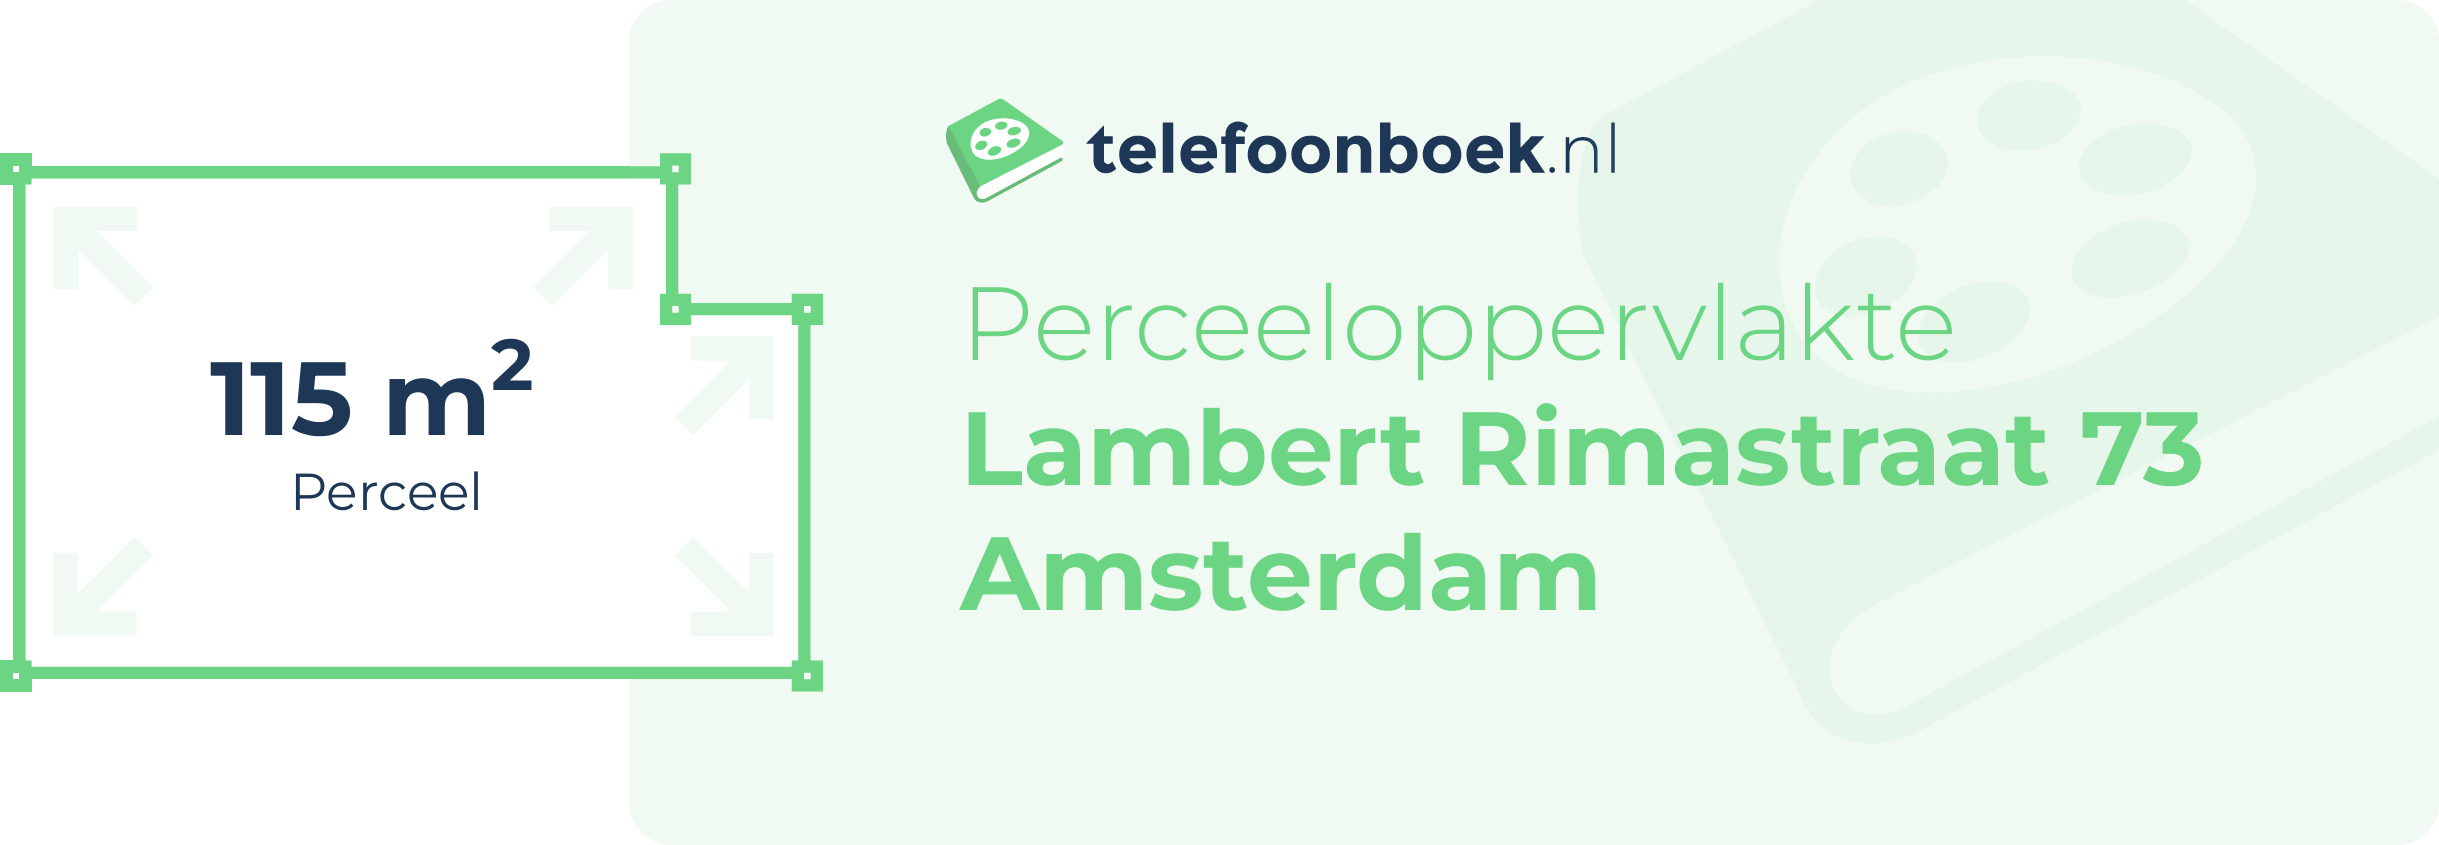 Perceeloppervlakte Lambert Rimastraat 73 Amsterdam